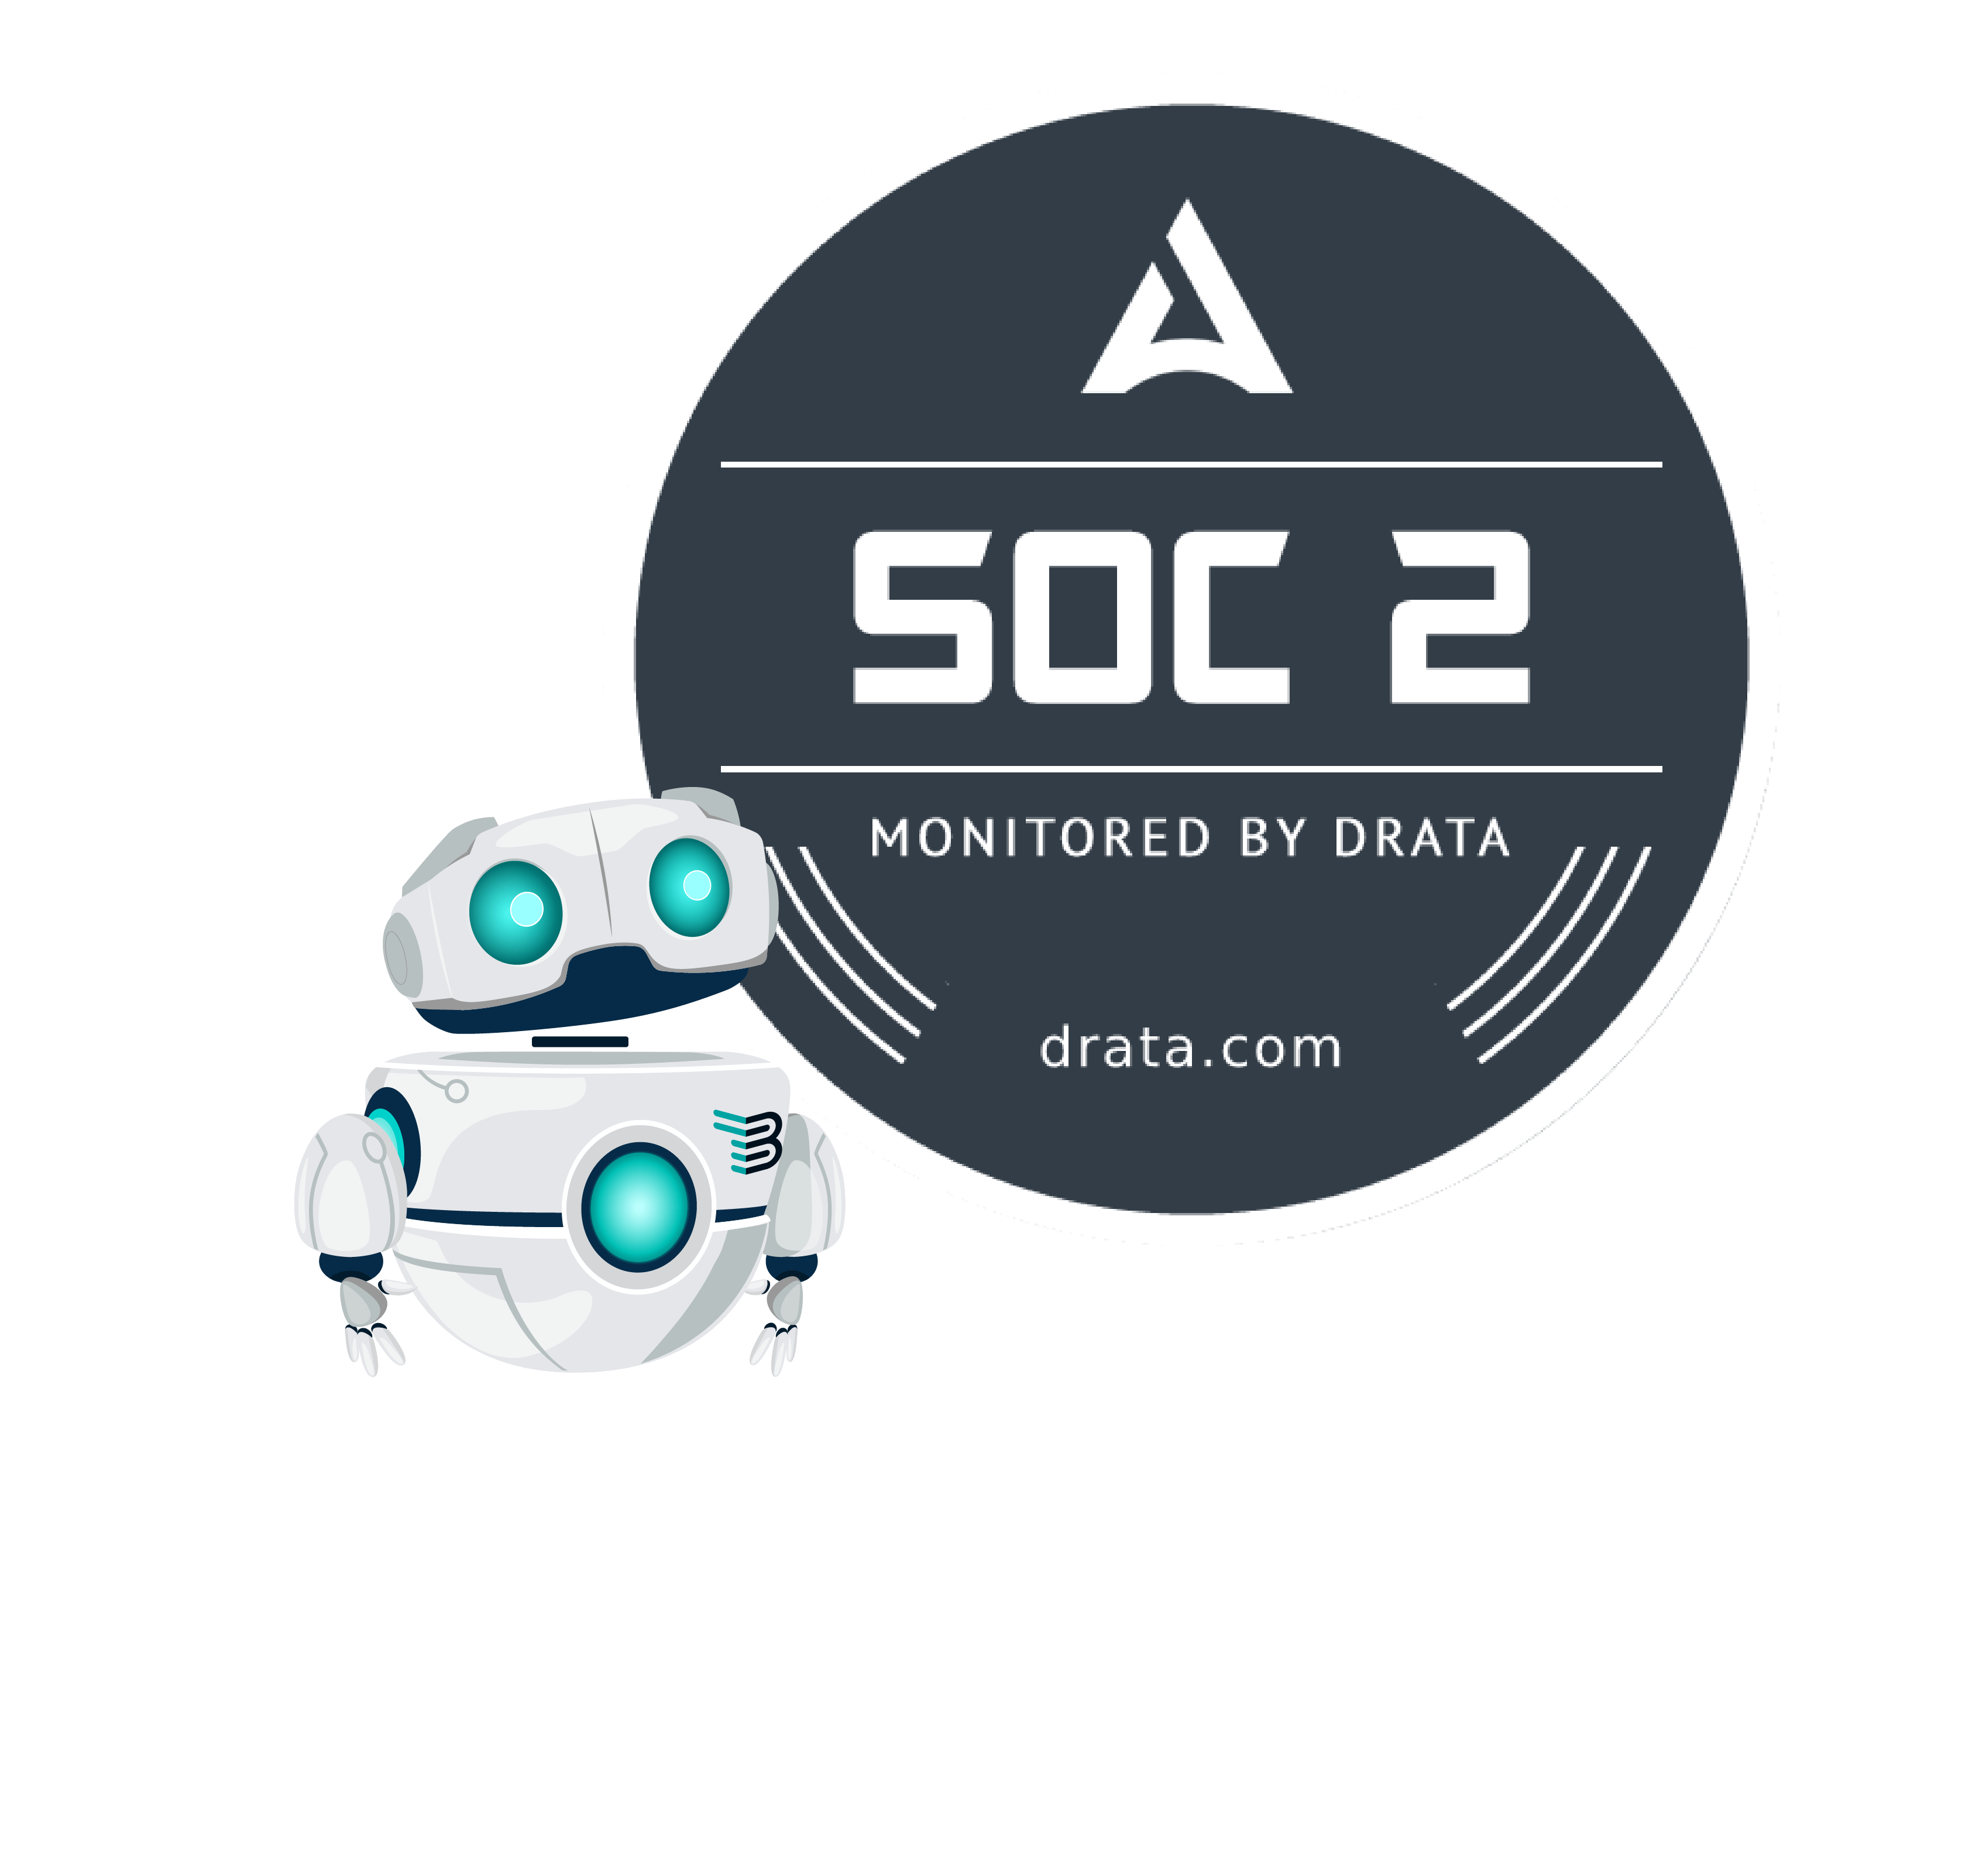 SOC 2 Drata logo and TealBot